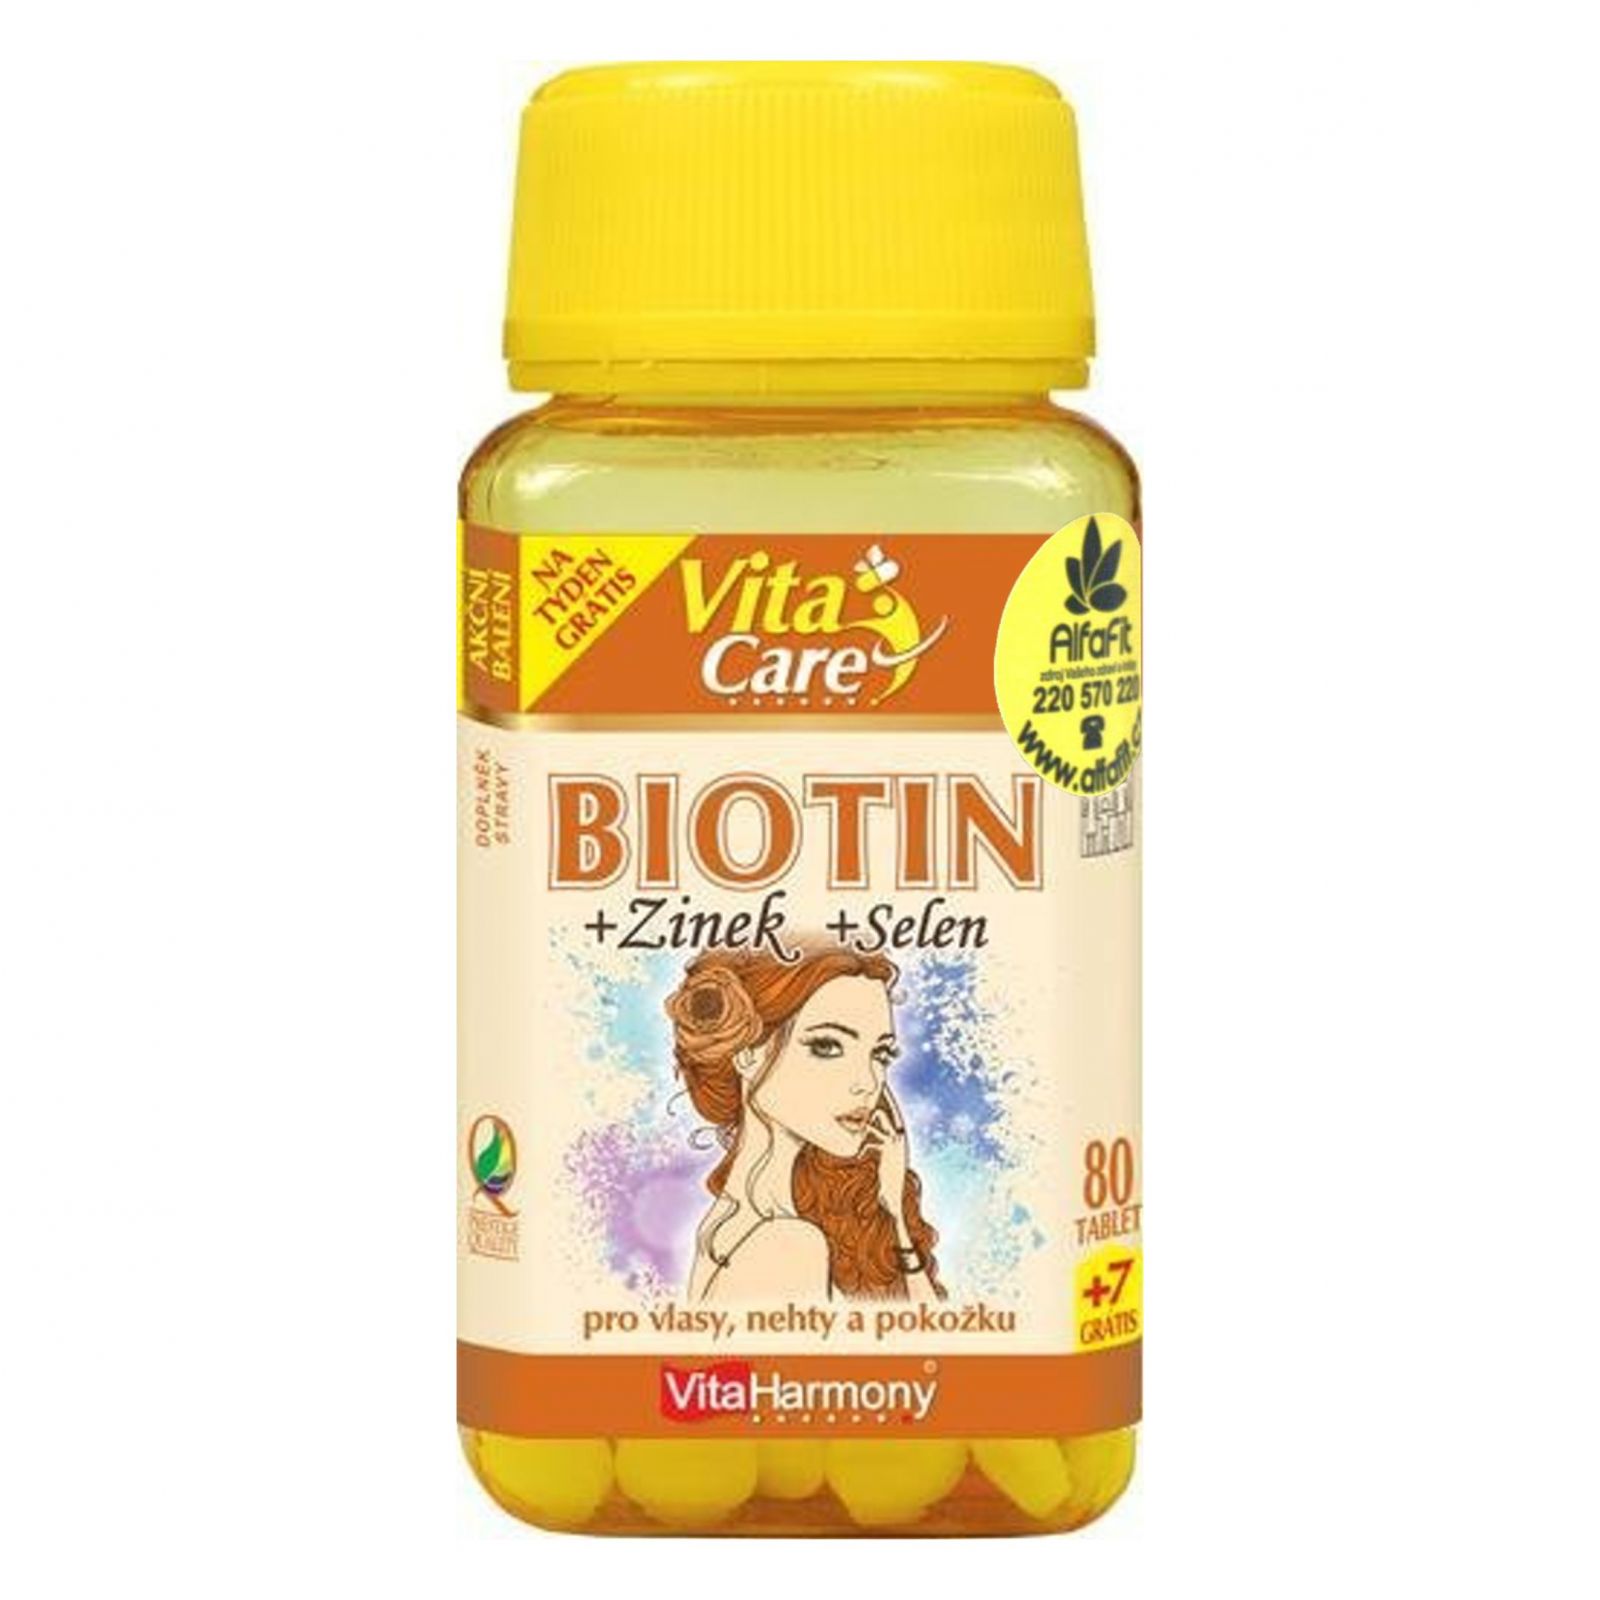 Селен биотин. Биотин. Селен биотин витамины. Детские витамины с цинком и селеном. Биотин цинк витамины.